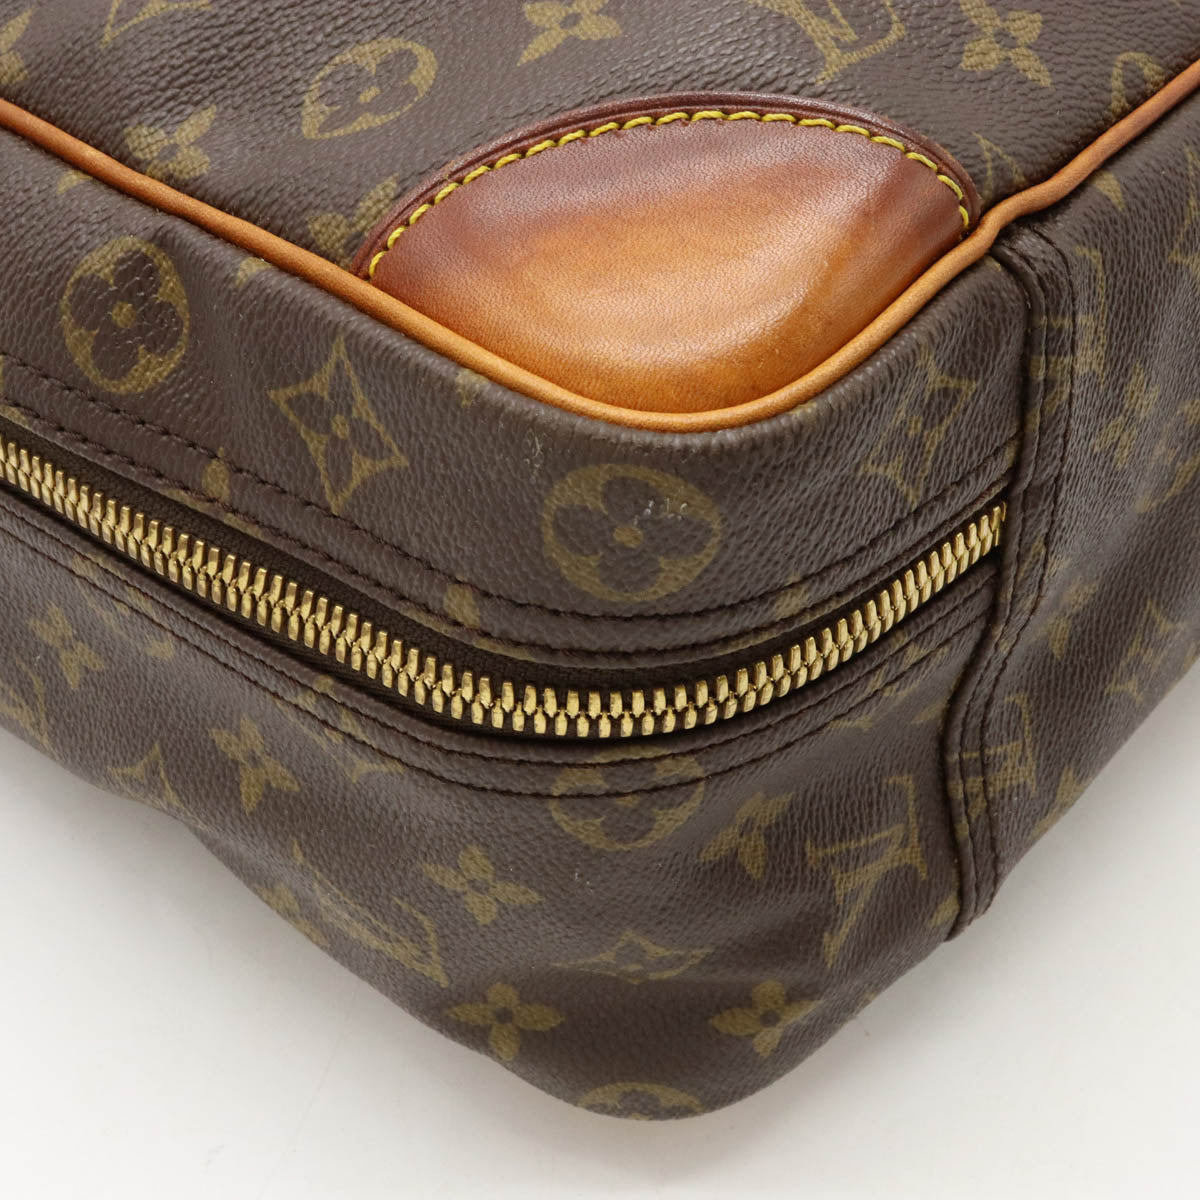 Louis Vuitton, Bags, Louis Vuitton Sirius 45 Travel Bag